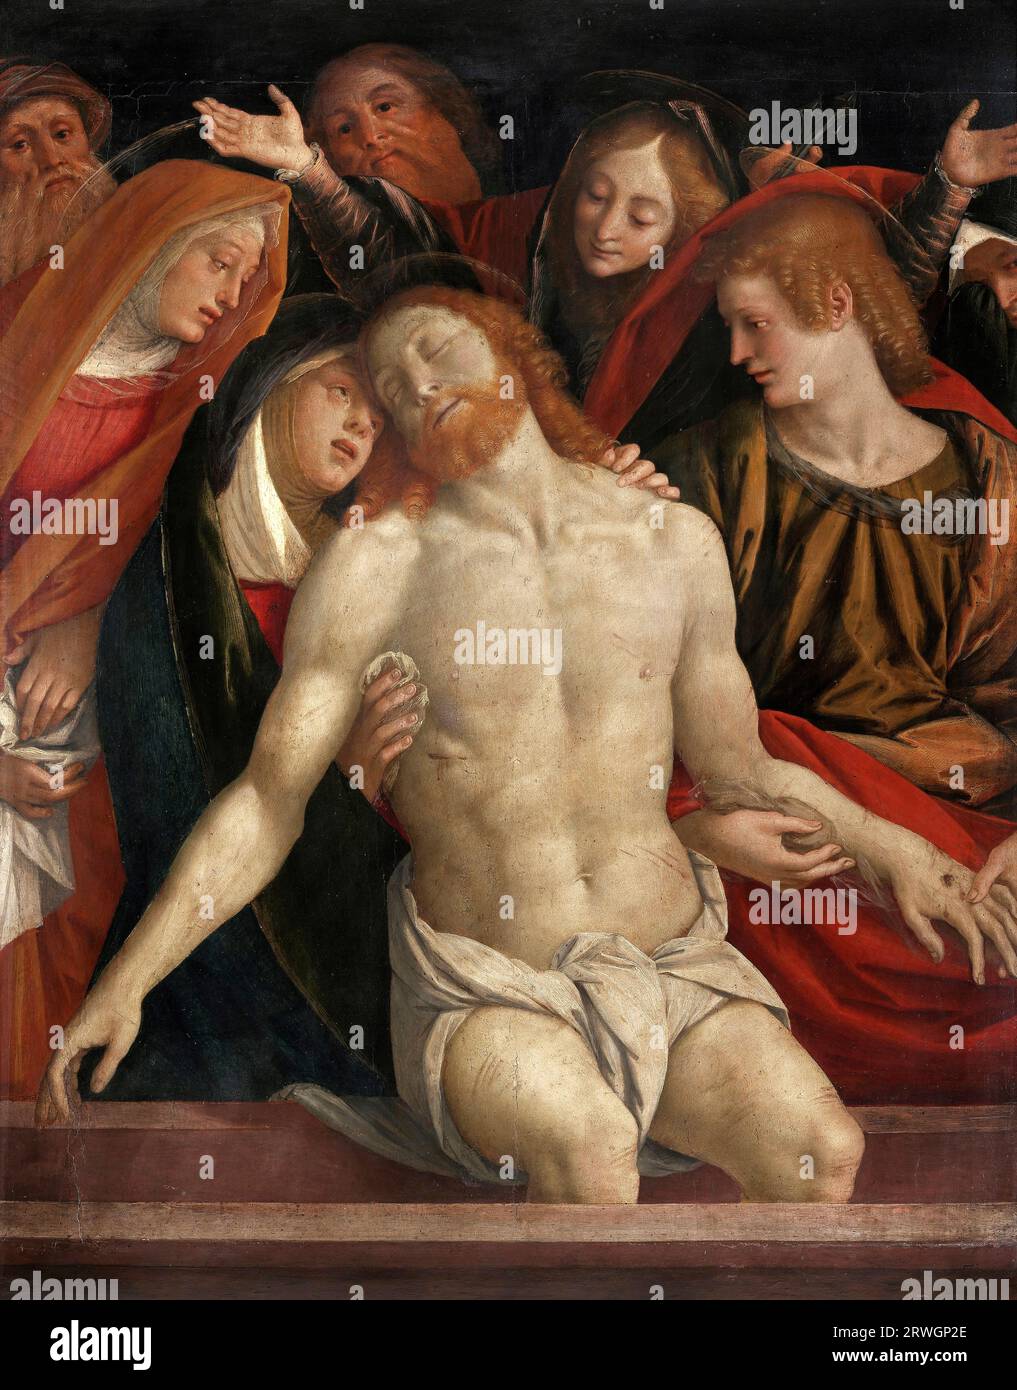 The Lamentation of Christ by the Italian Renaissance artist, Gaudenzio Ferrari (c. 1471-1546), oil on wood, c. 1533 Stock Photo